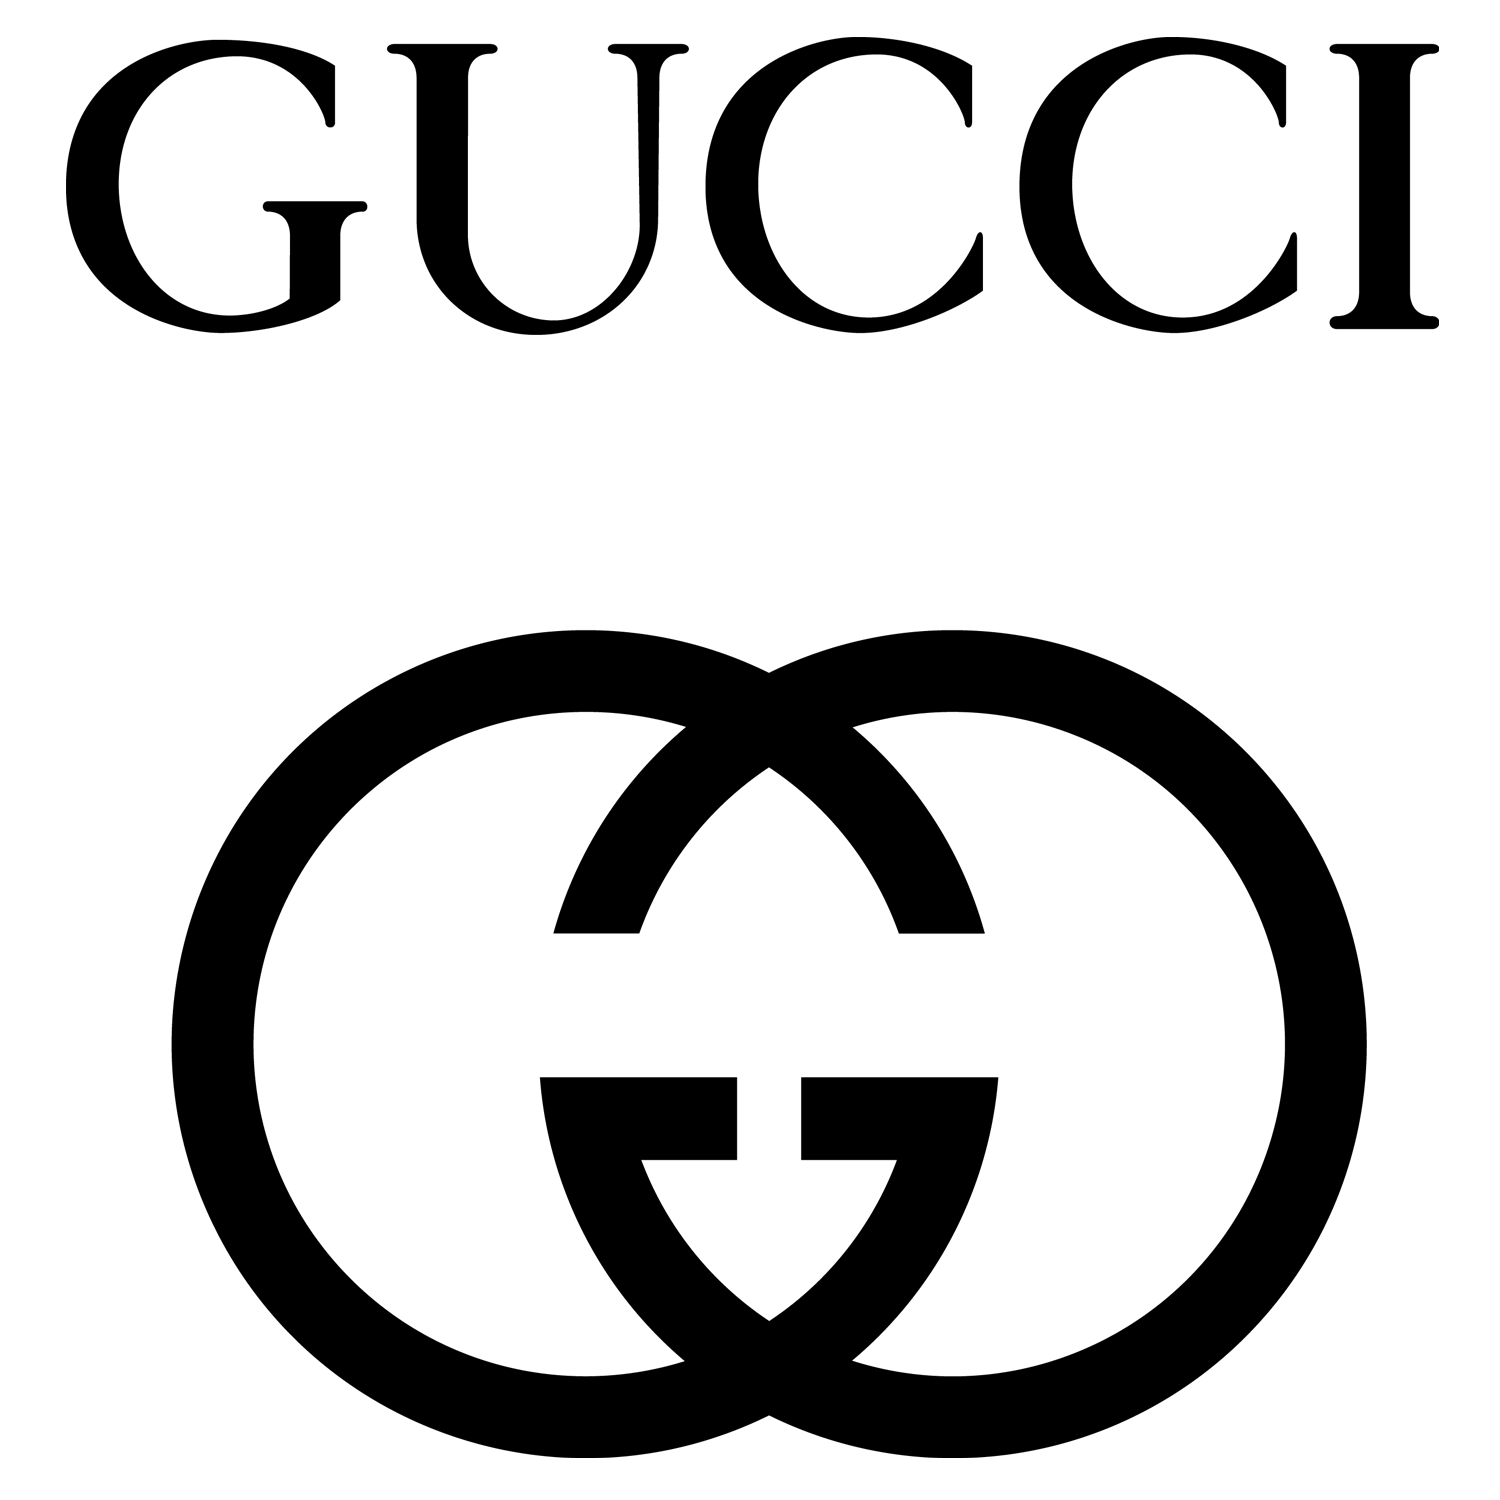 Gucci logo, logotype